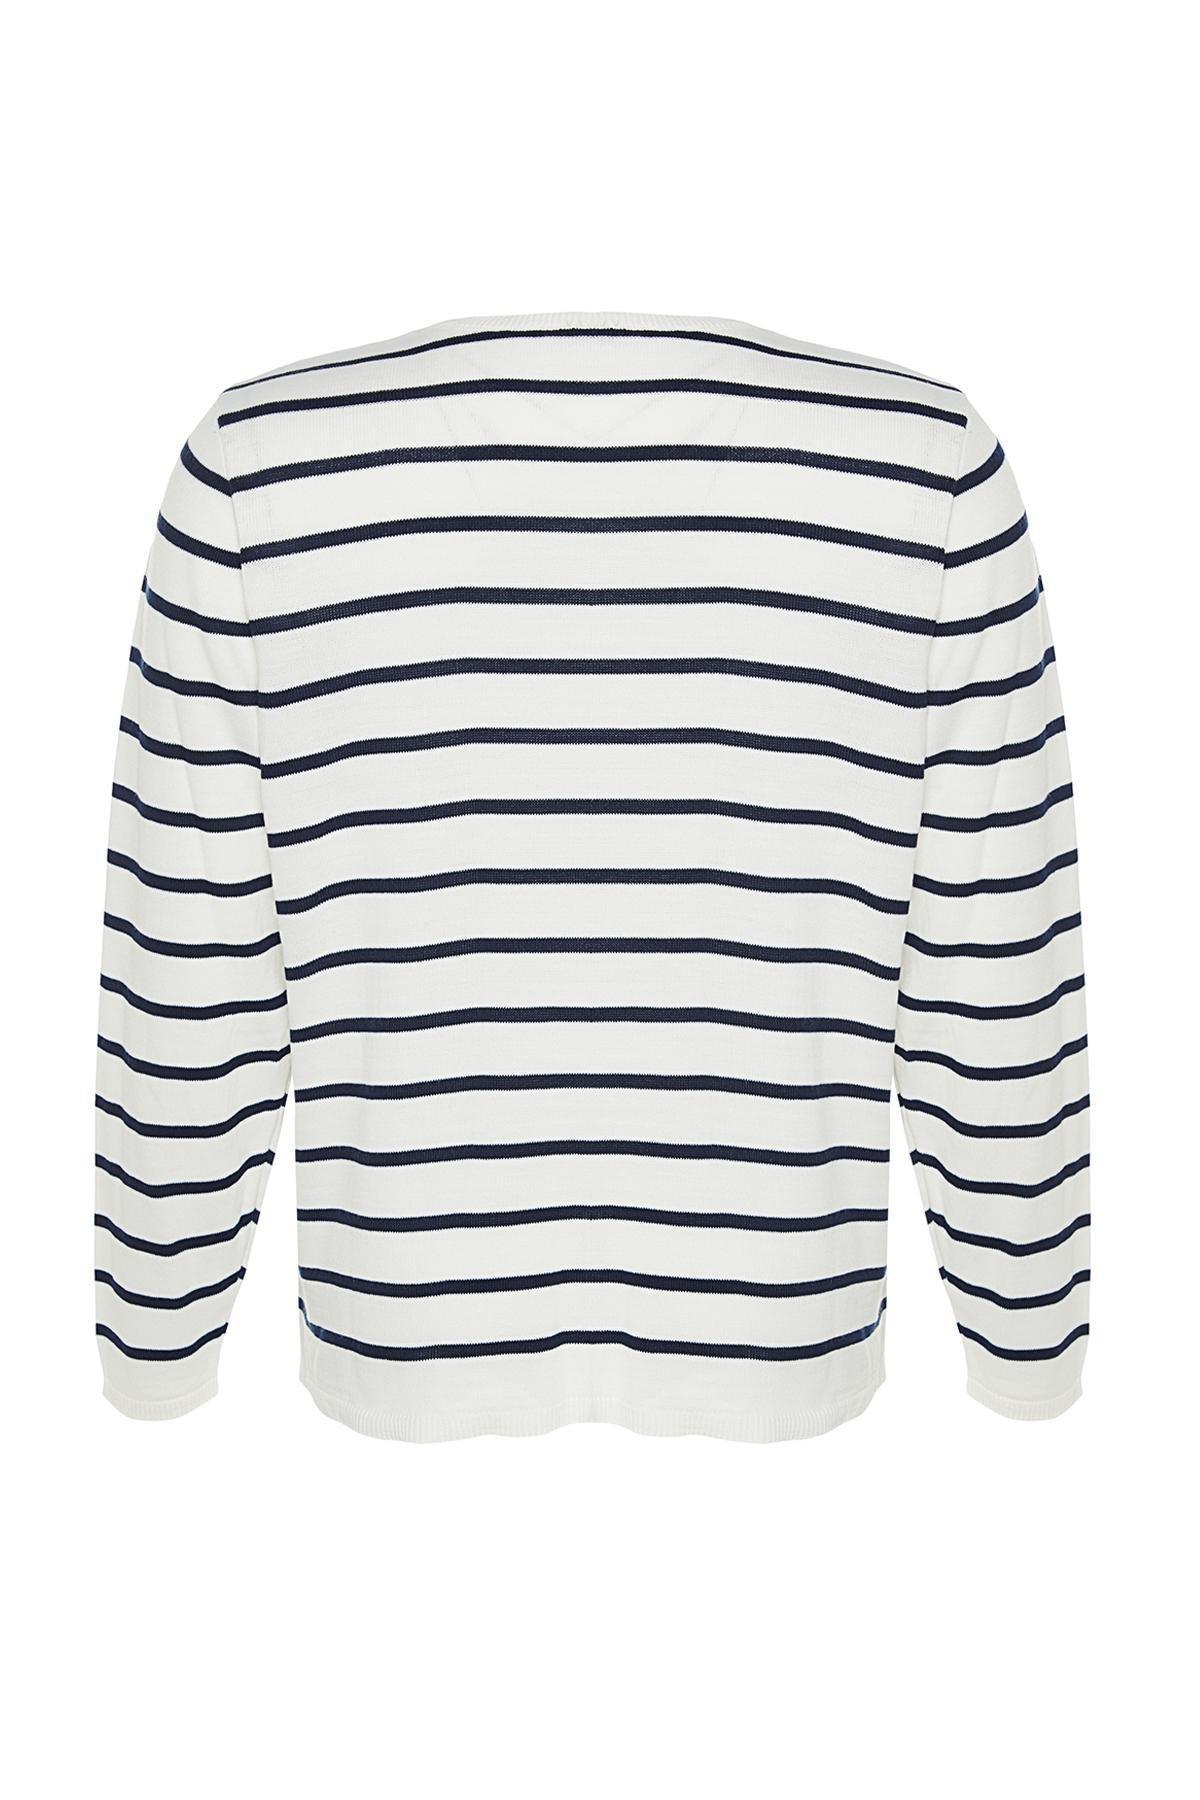 Trendyol - Cream Striped Knitted Cardigan